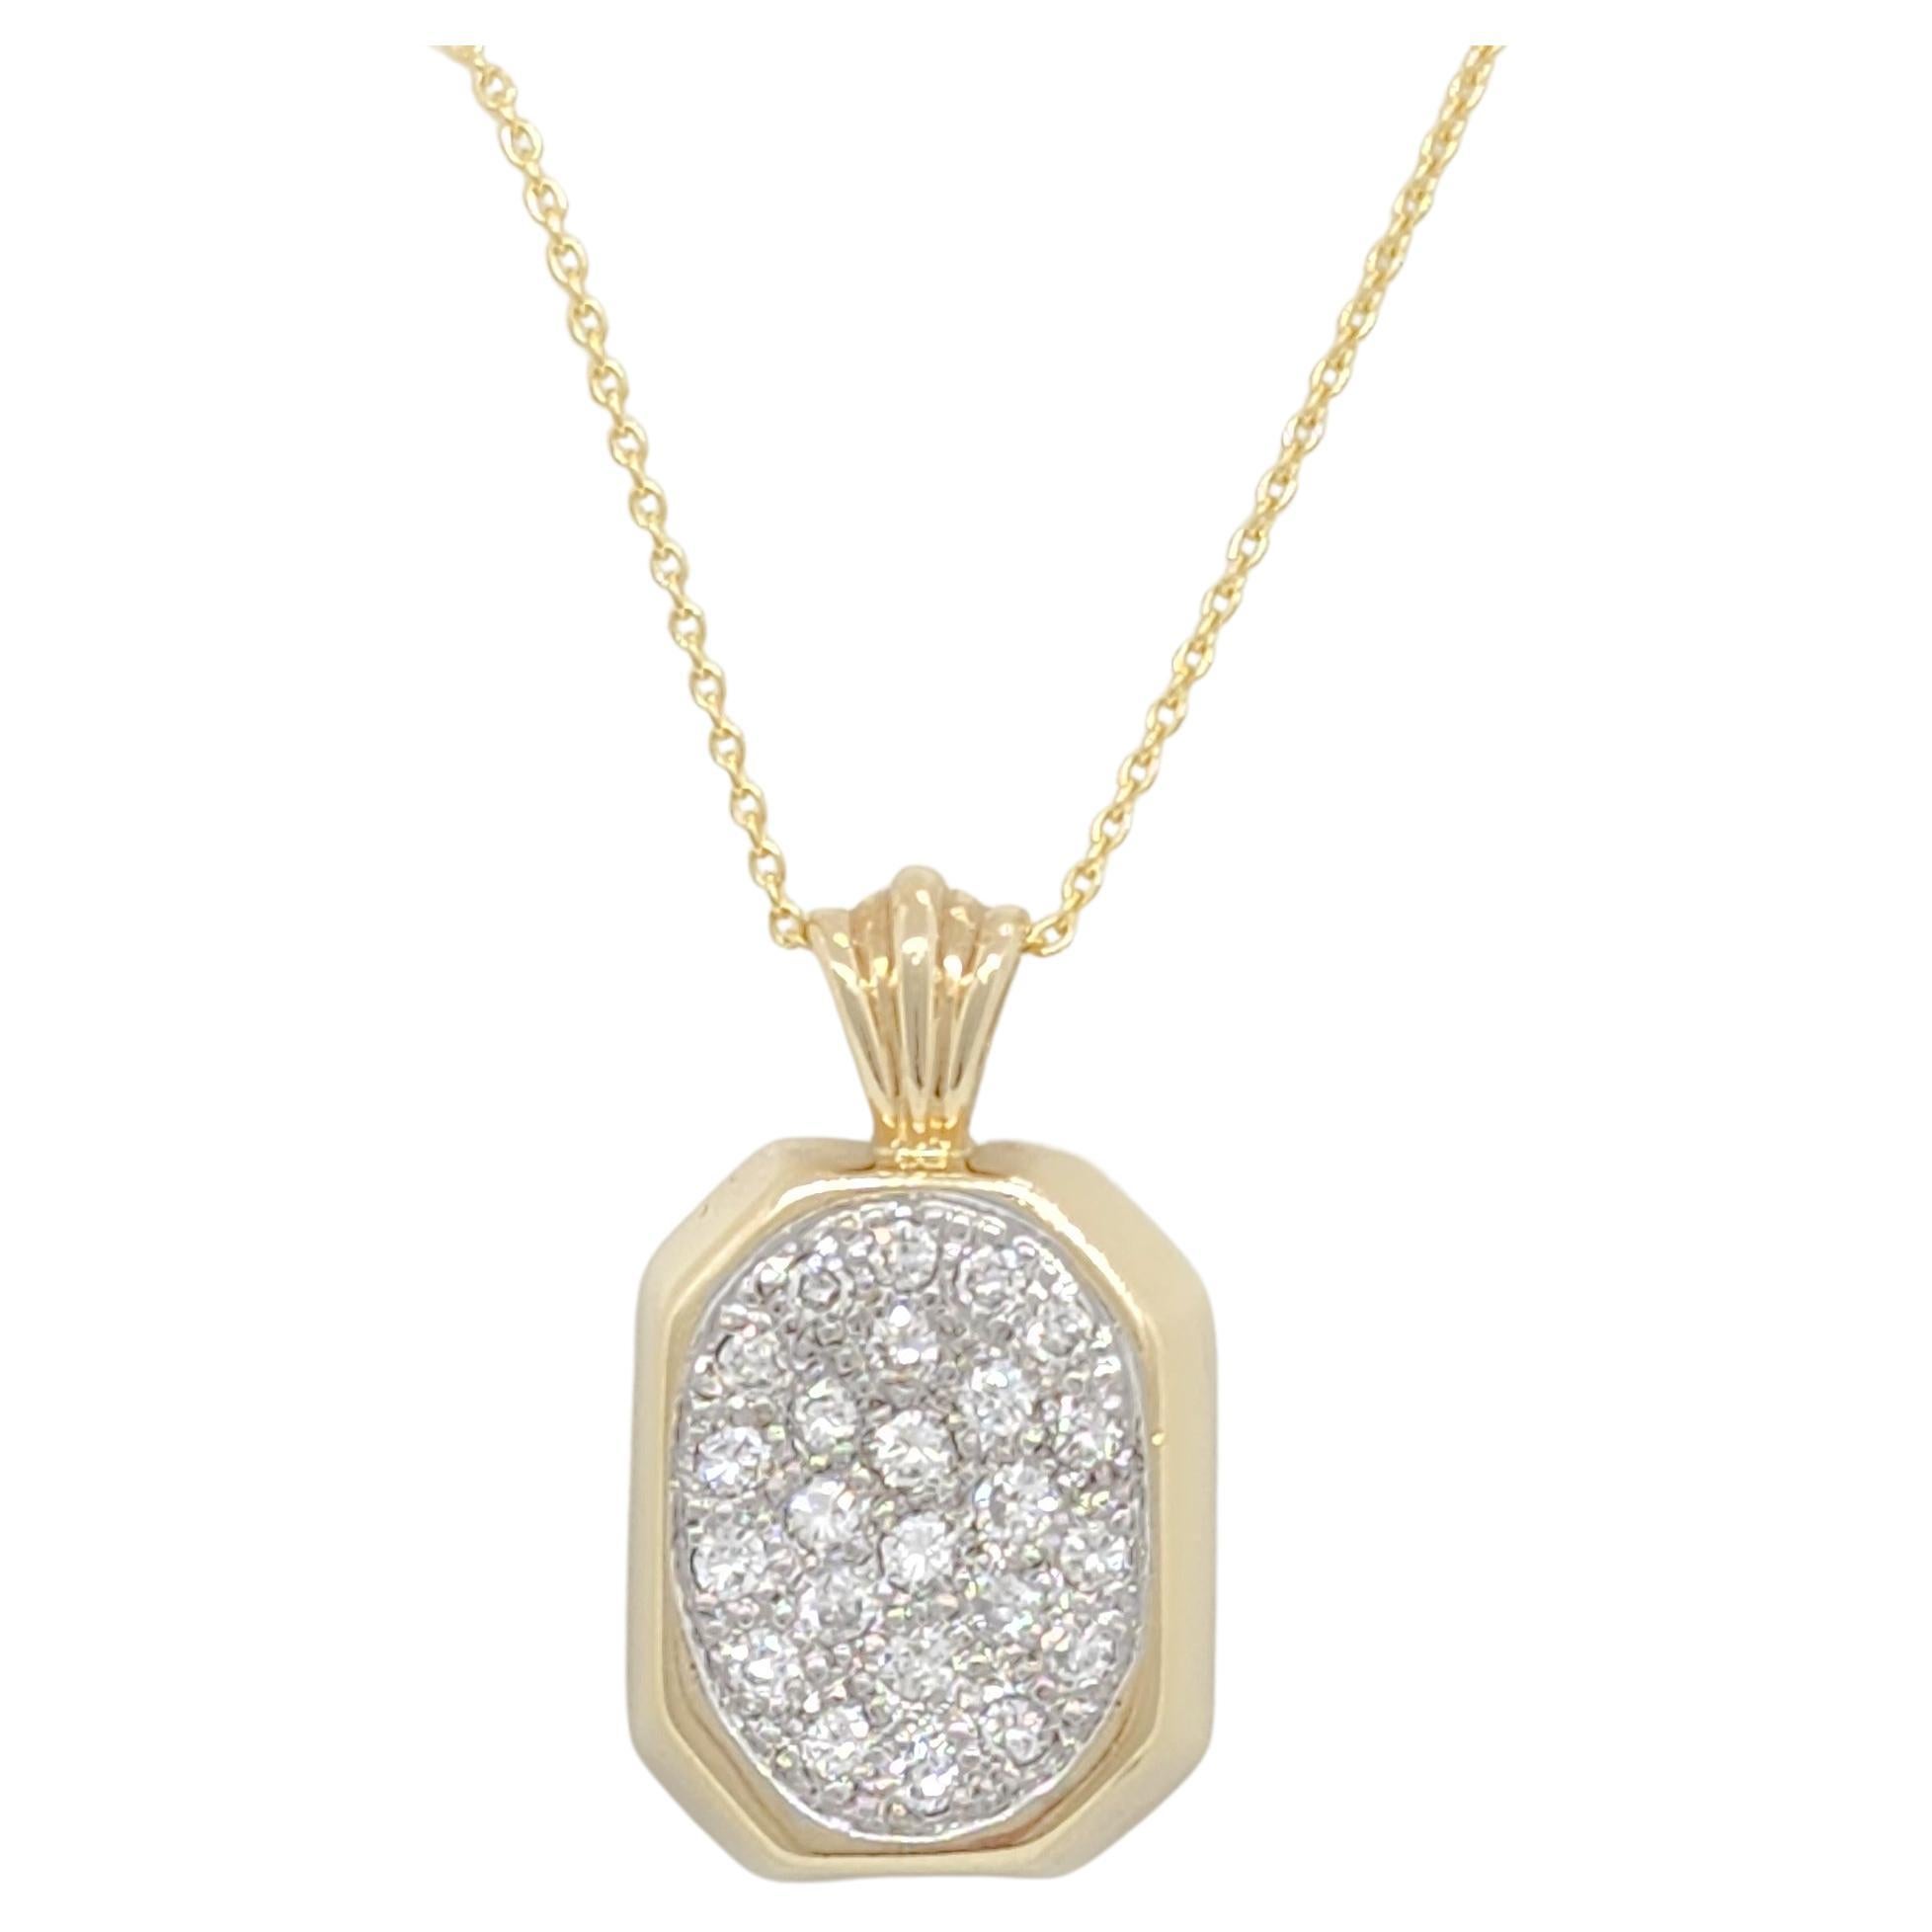 White Diamond Pineapple Design Pendant Necklace in 14k